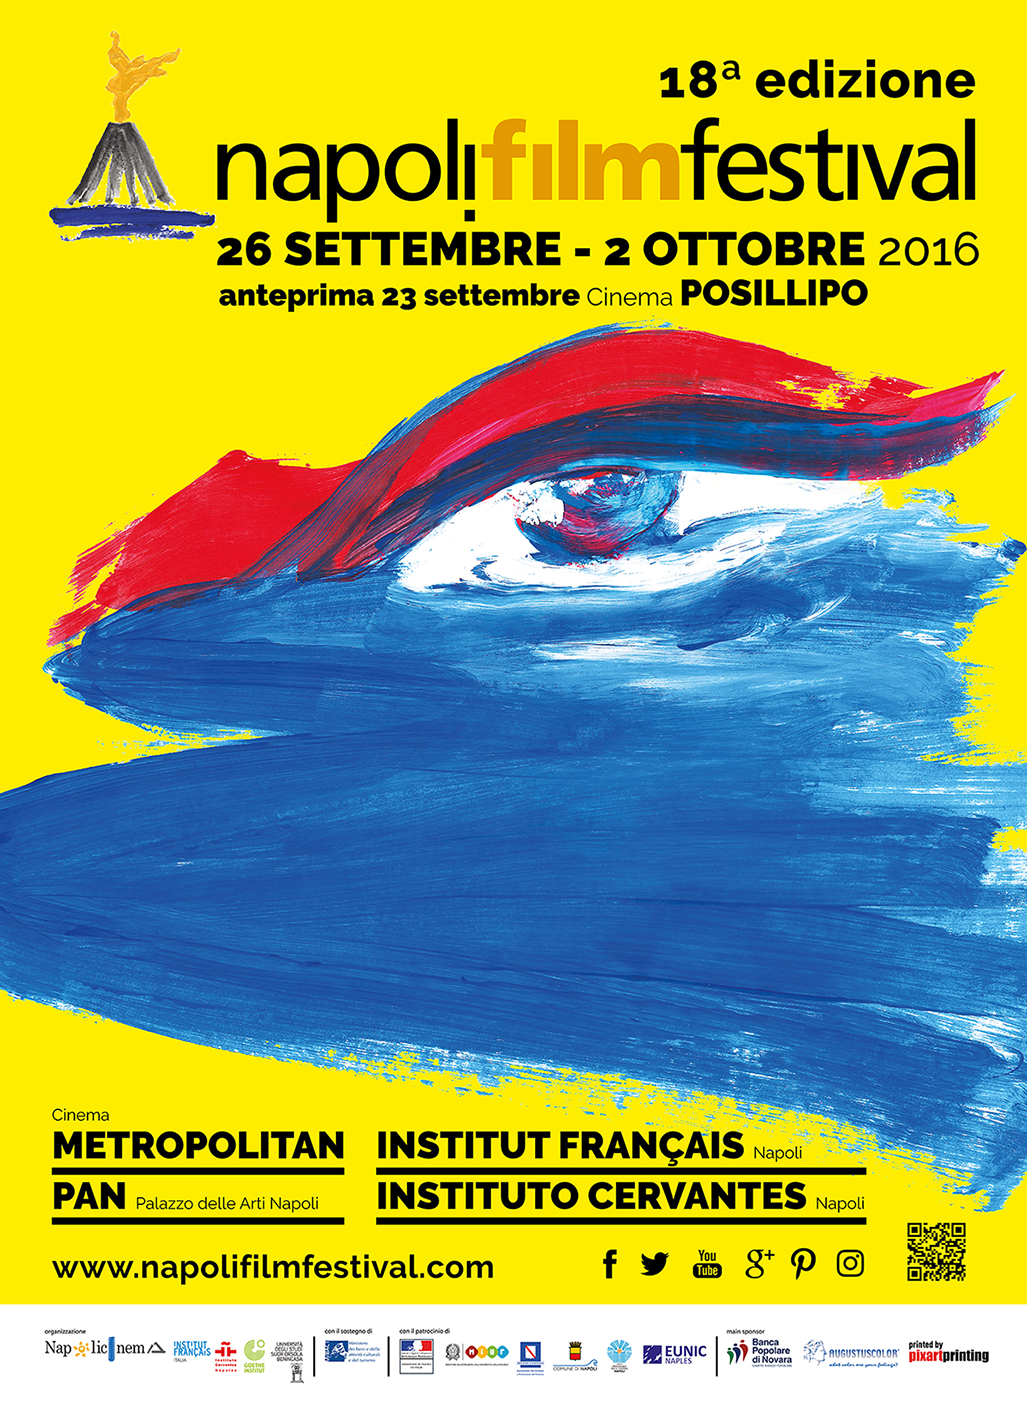 NapoliFilmFestival 2016